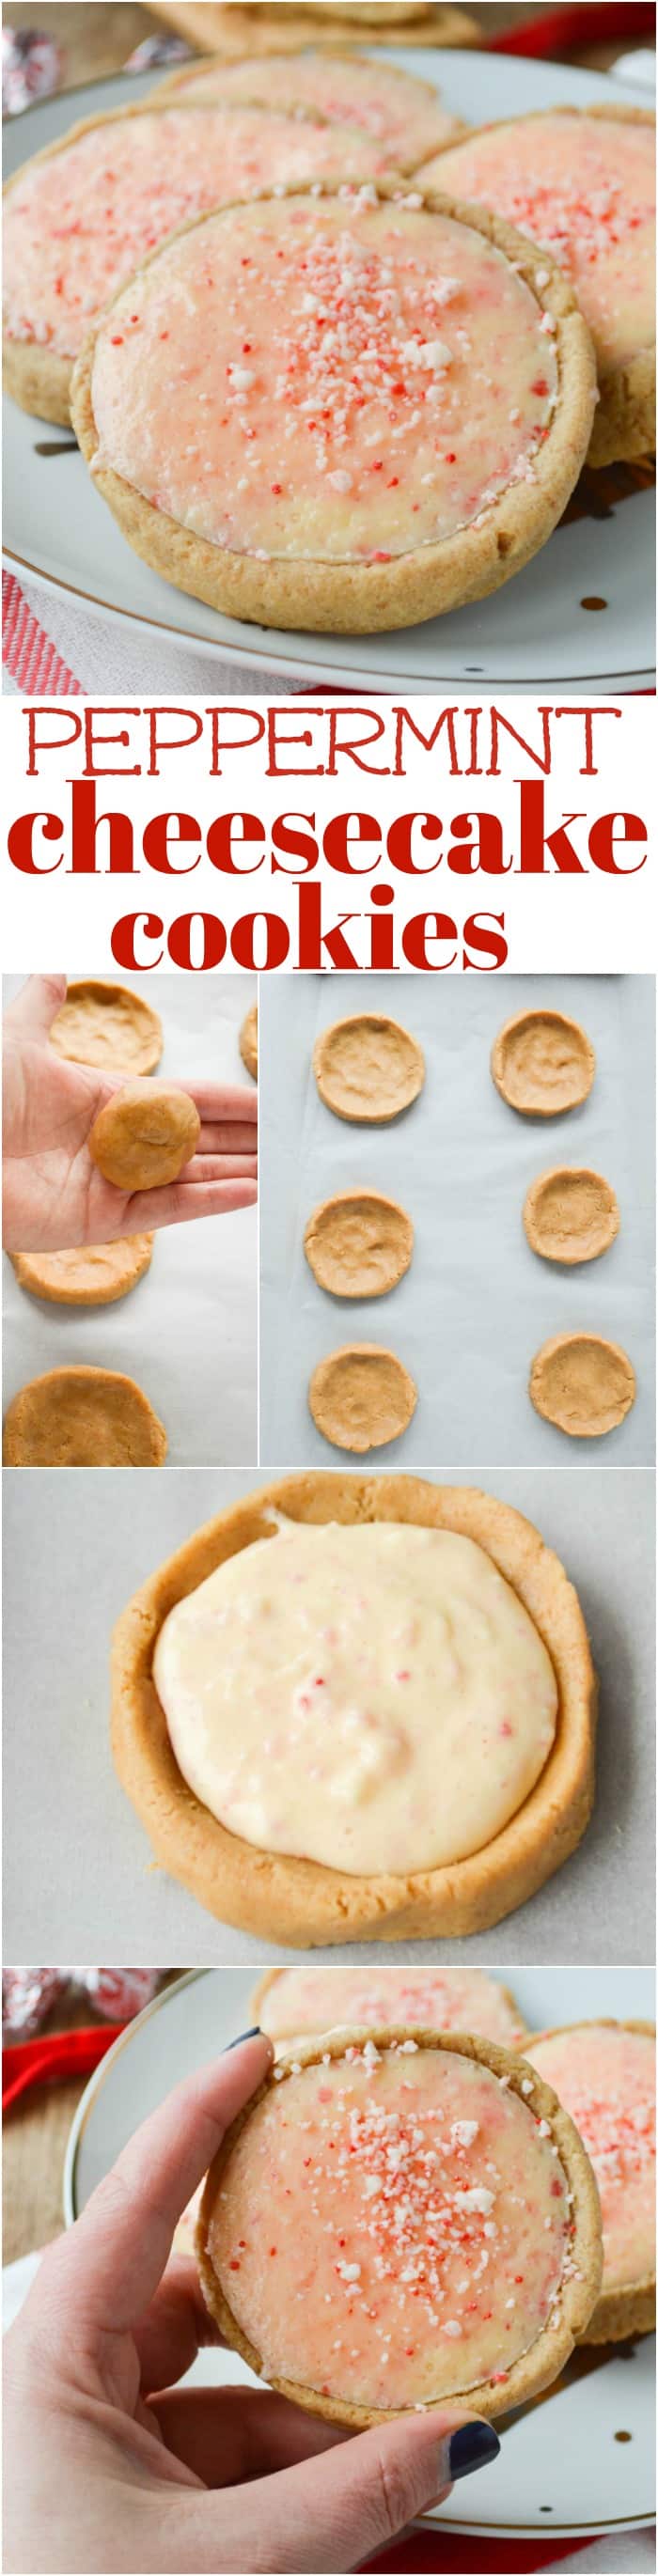 Peppermint Cheesecake Cookies Recipe